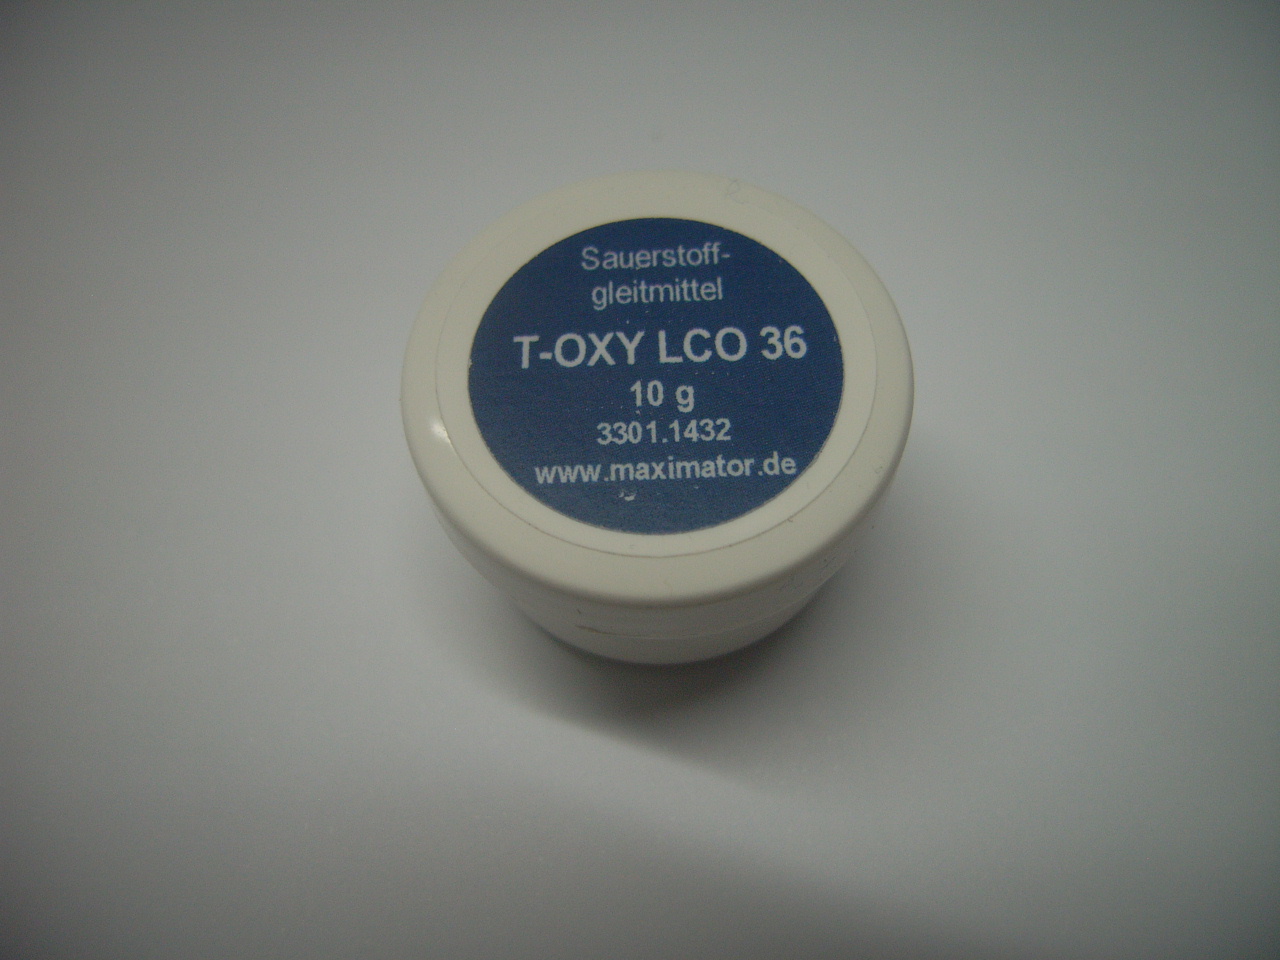 T-Oxy LCO 36, Sauerstoffgleitmittel, 10 g